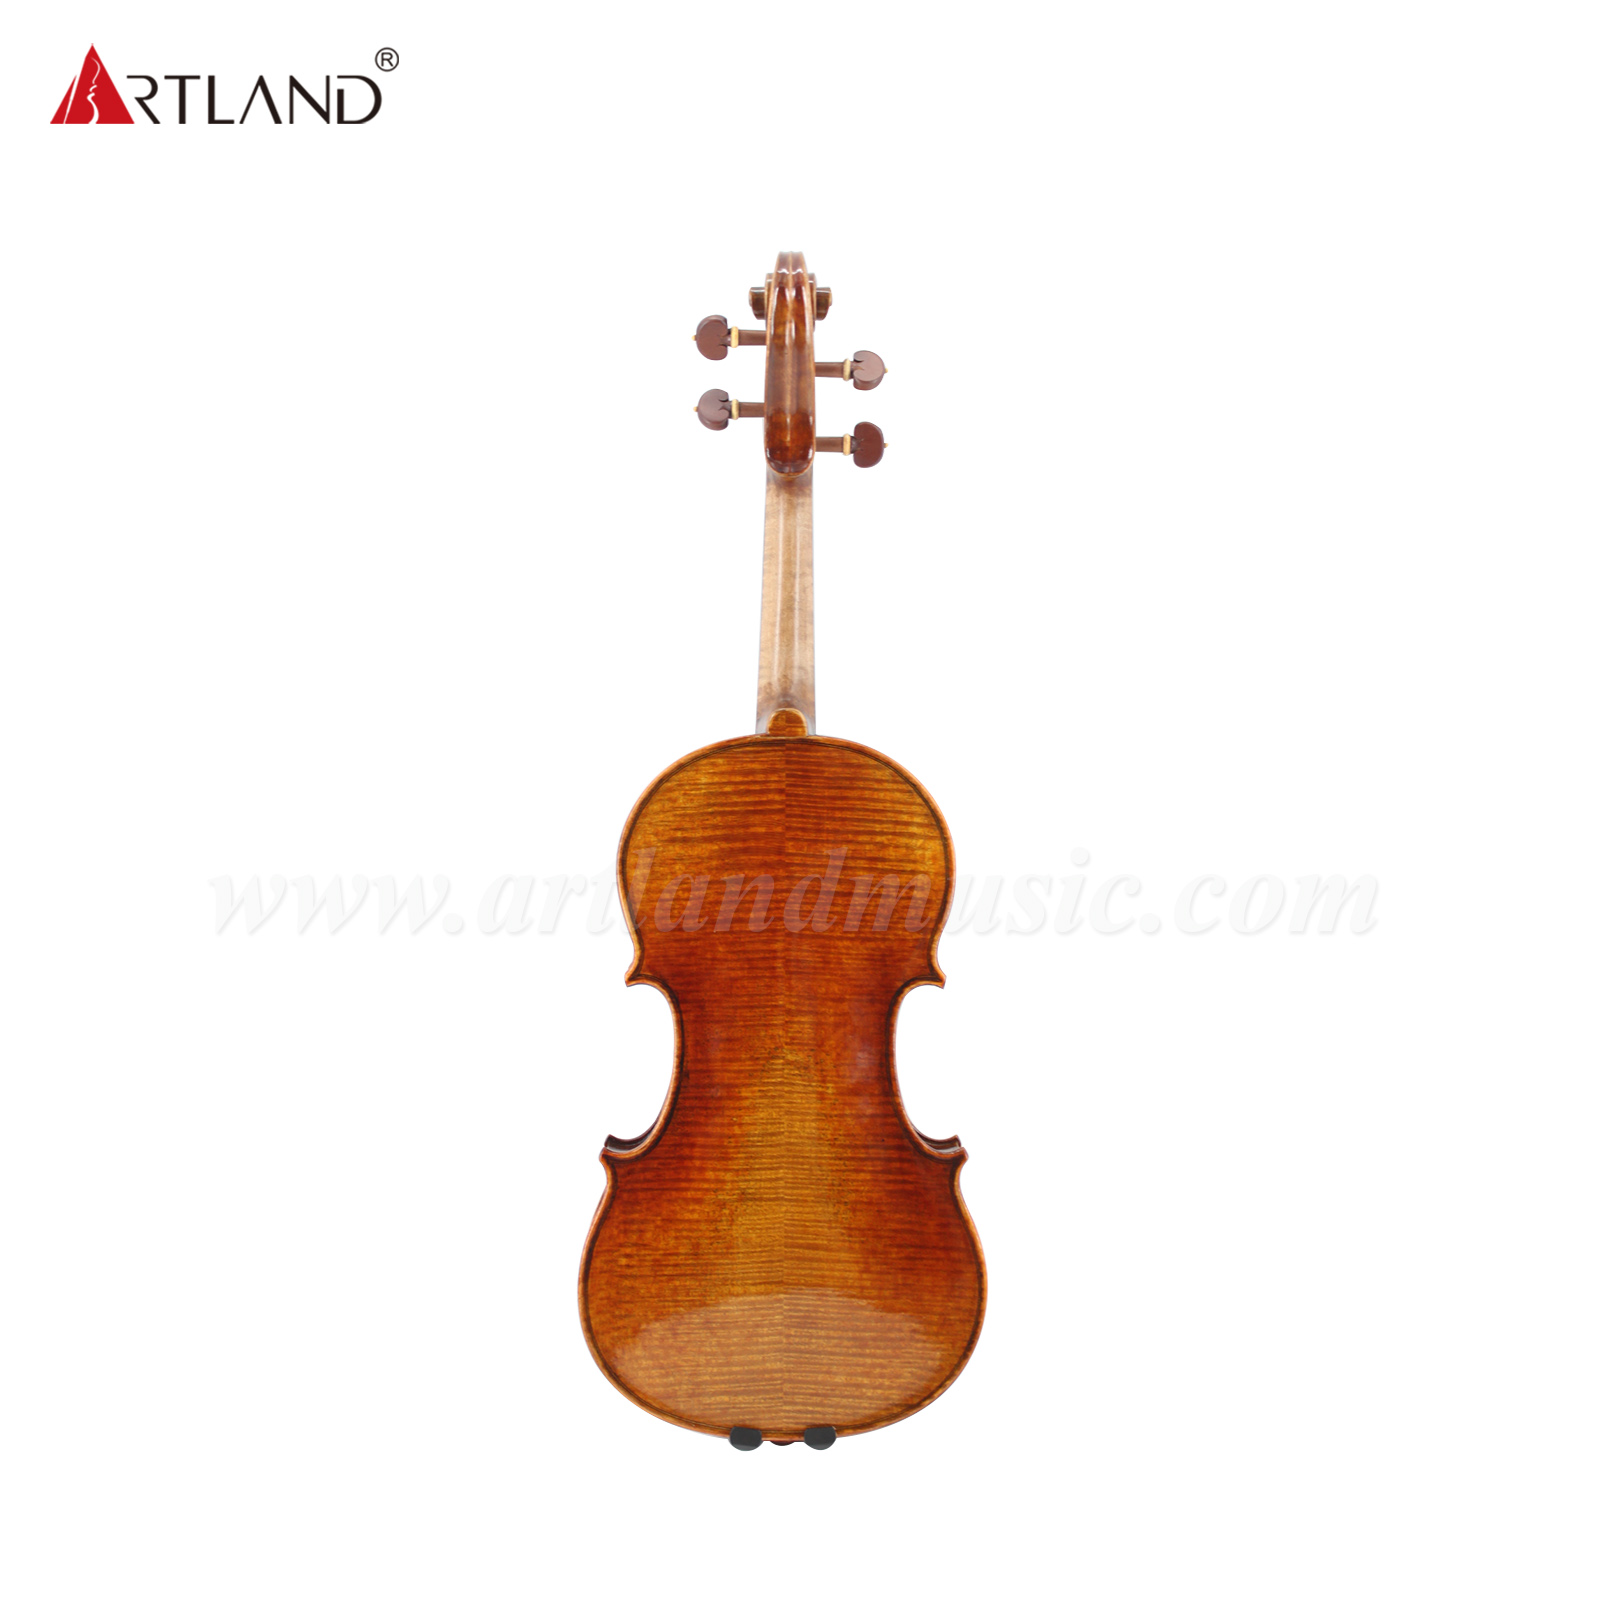 Guarneri Violin Solo Violin High Grade Antique Model Violin (PVE80)